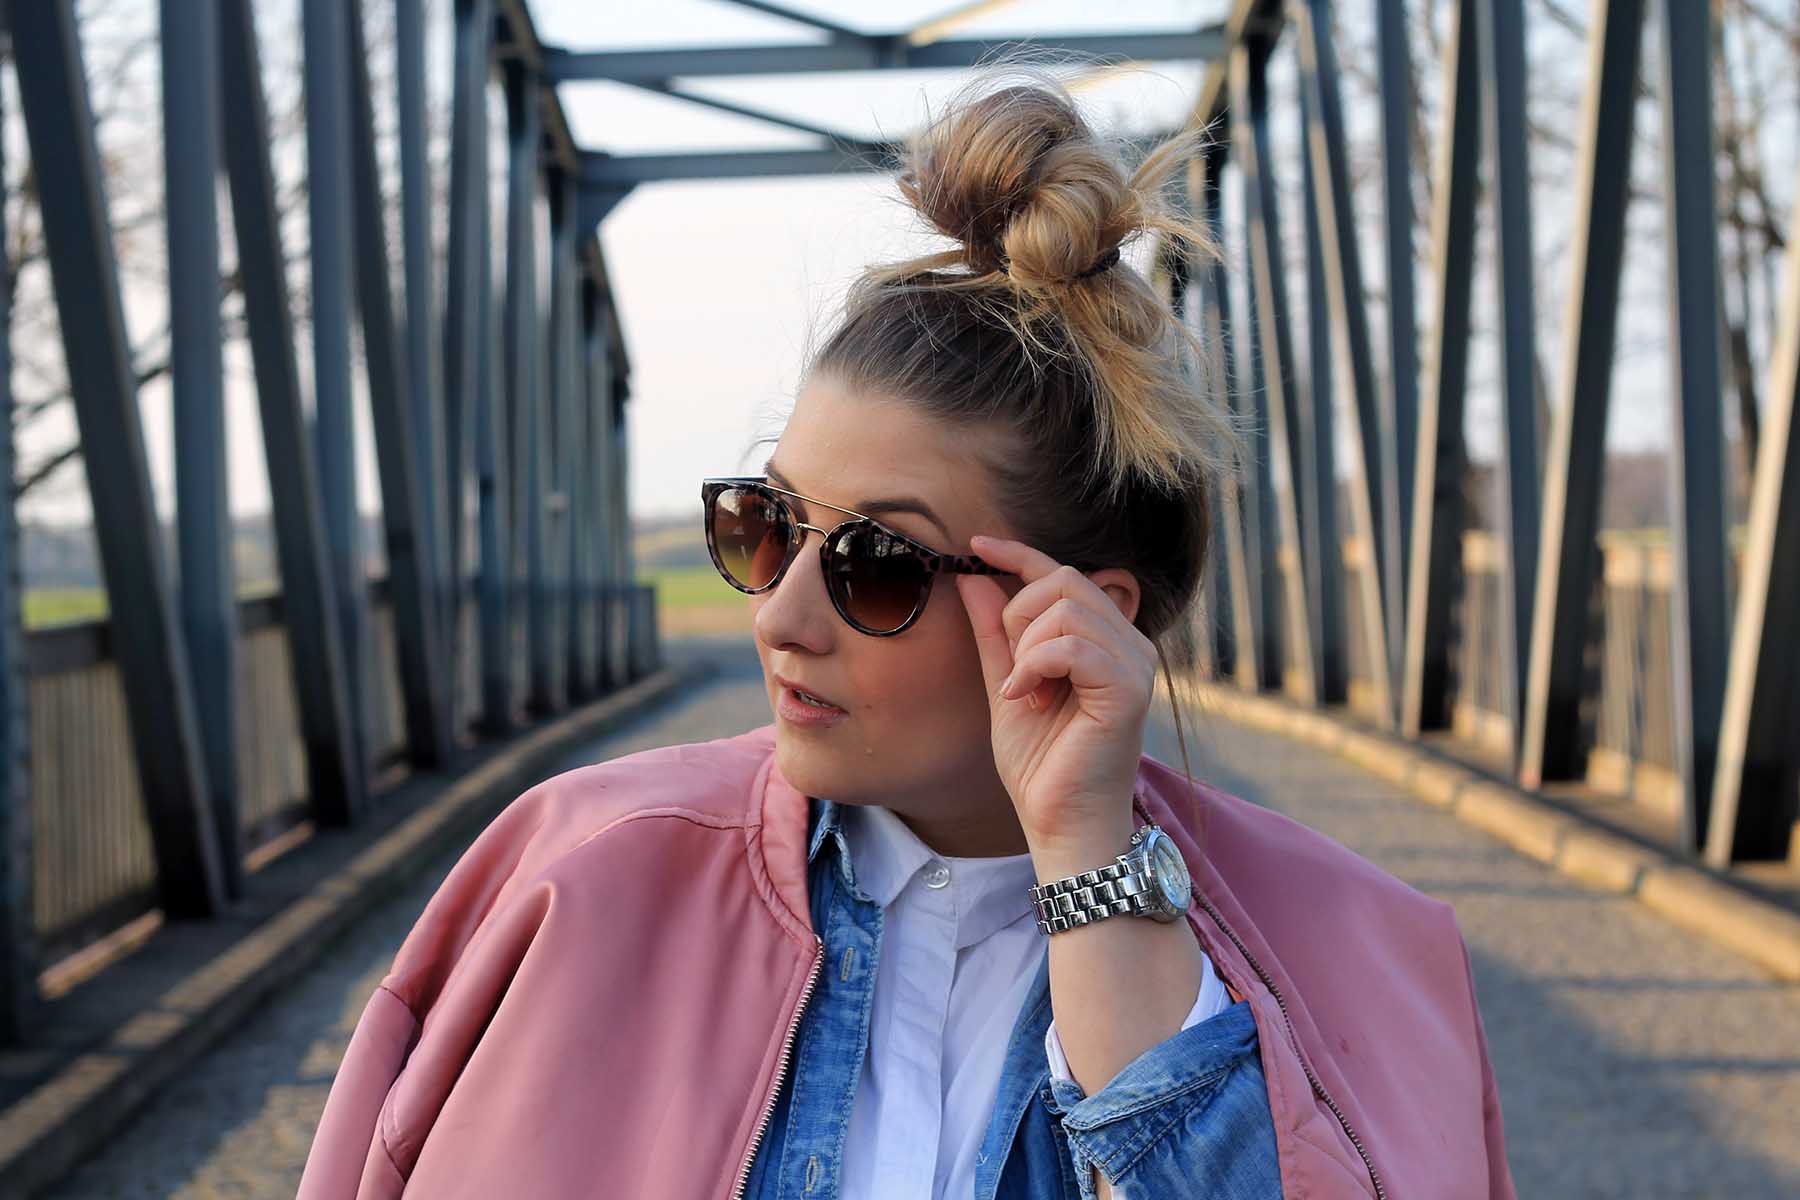 sonnenbrille-primark-look-style-modeblog-fashionblog